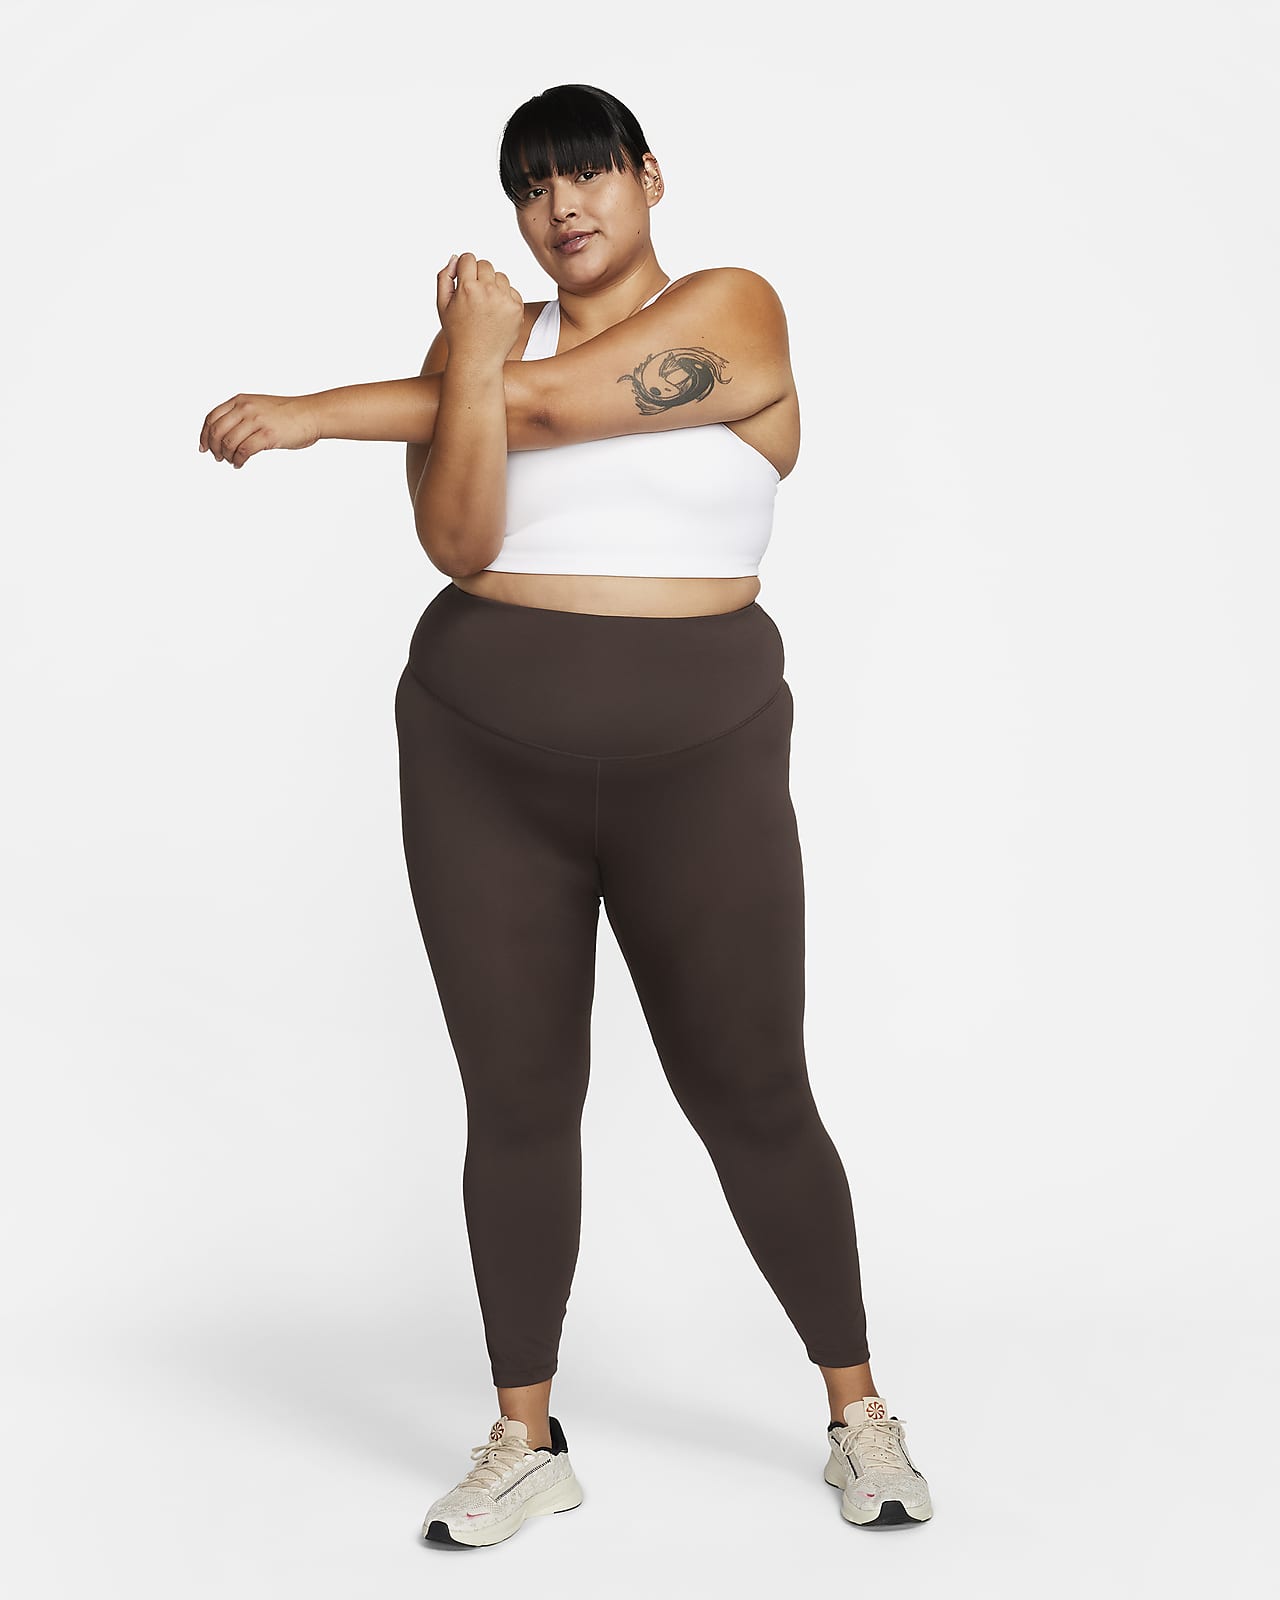 Leggings de cintura subida Nike One para mulher (tamanhos grandes)